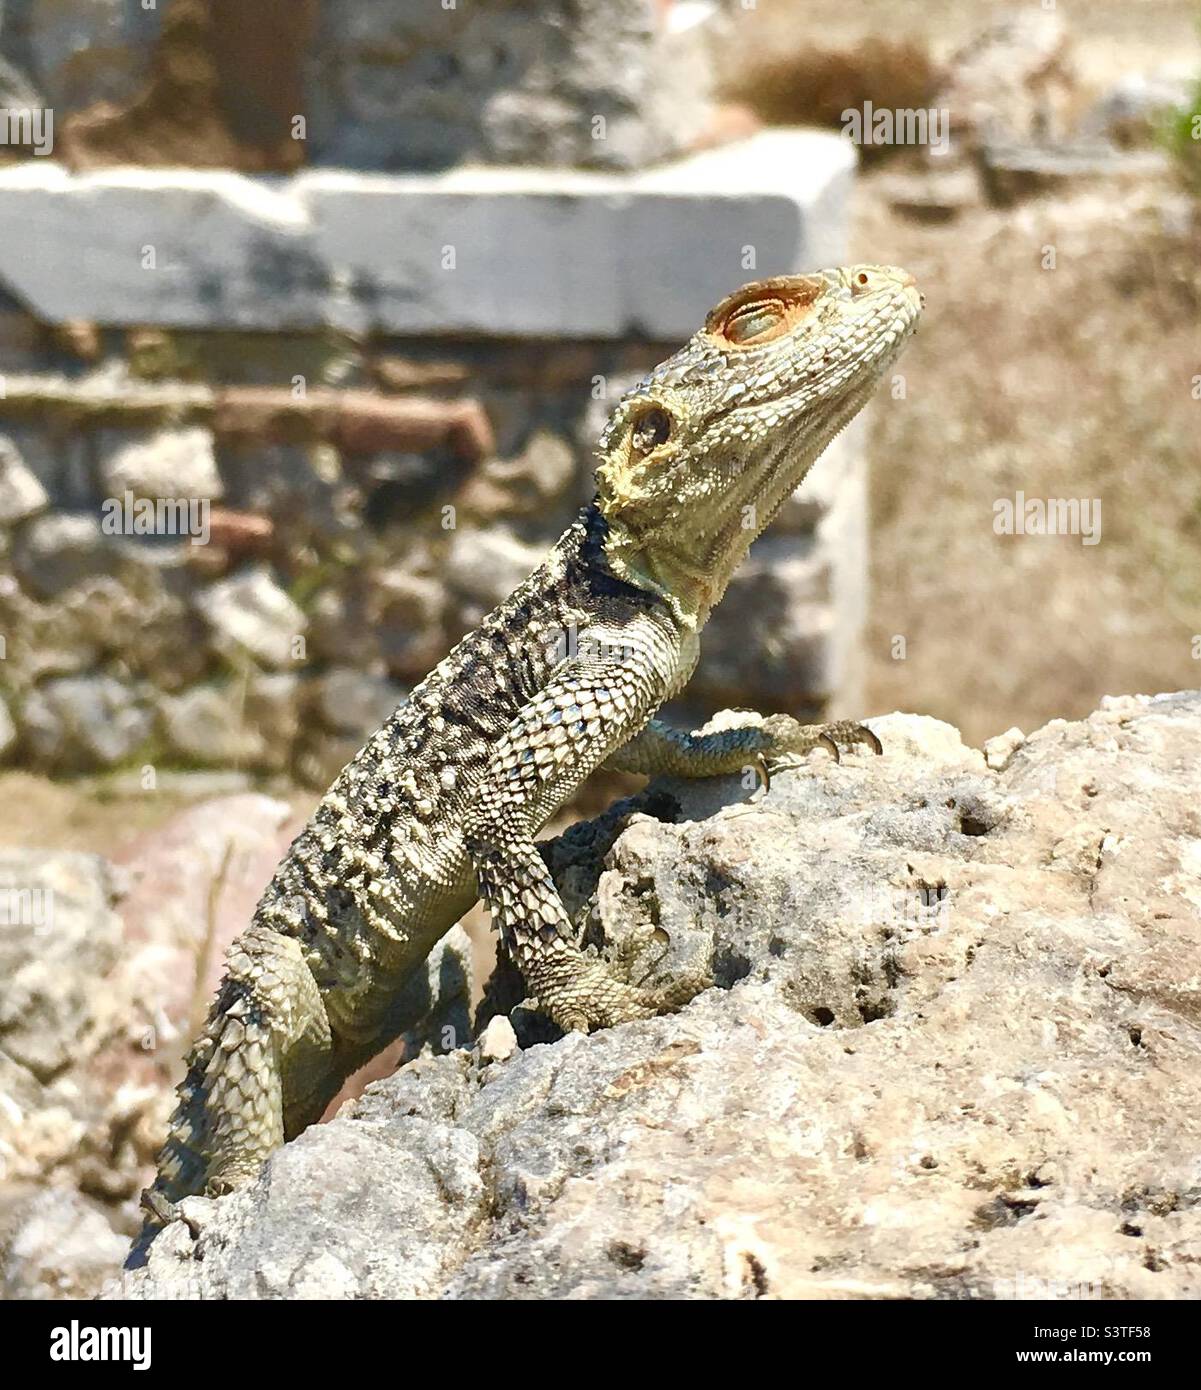 Lizard sunning itself on a Greek island Stock Photo